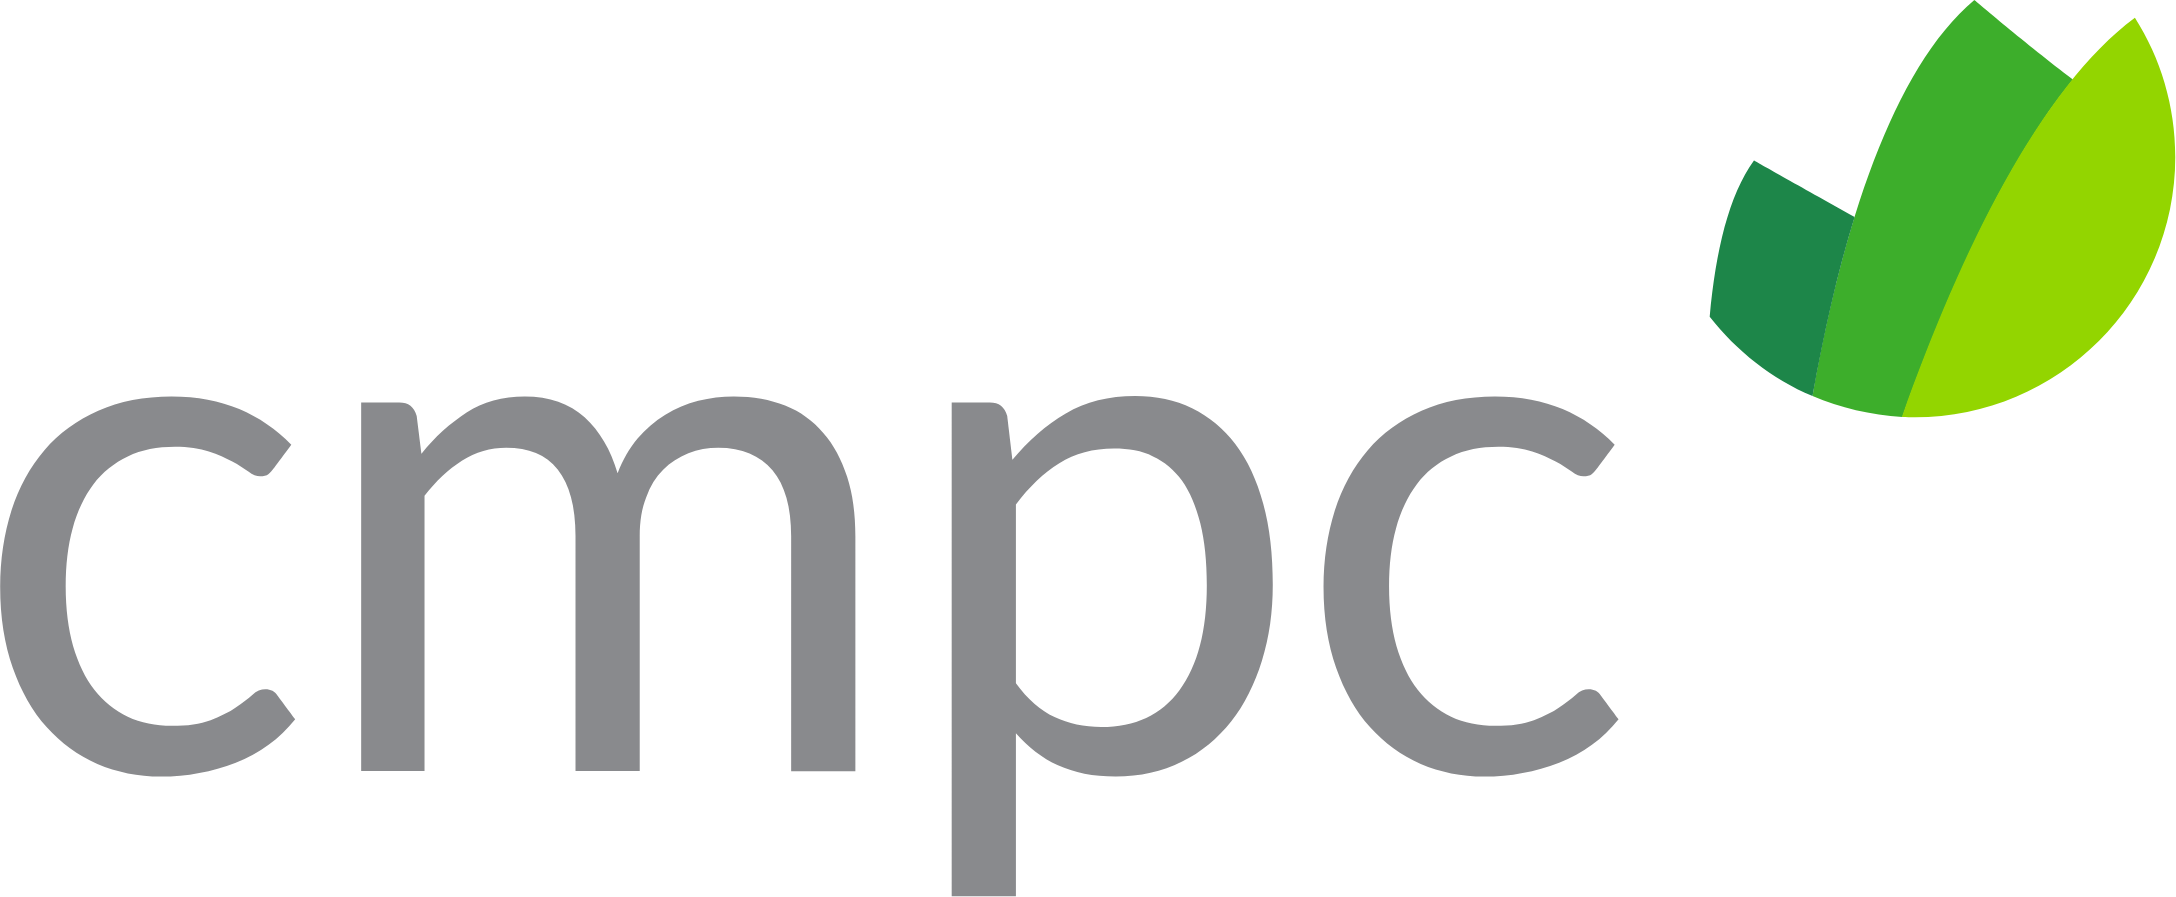 Empresas CMPC logo large (transparent PNG)